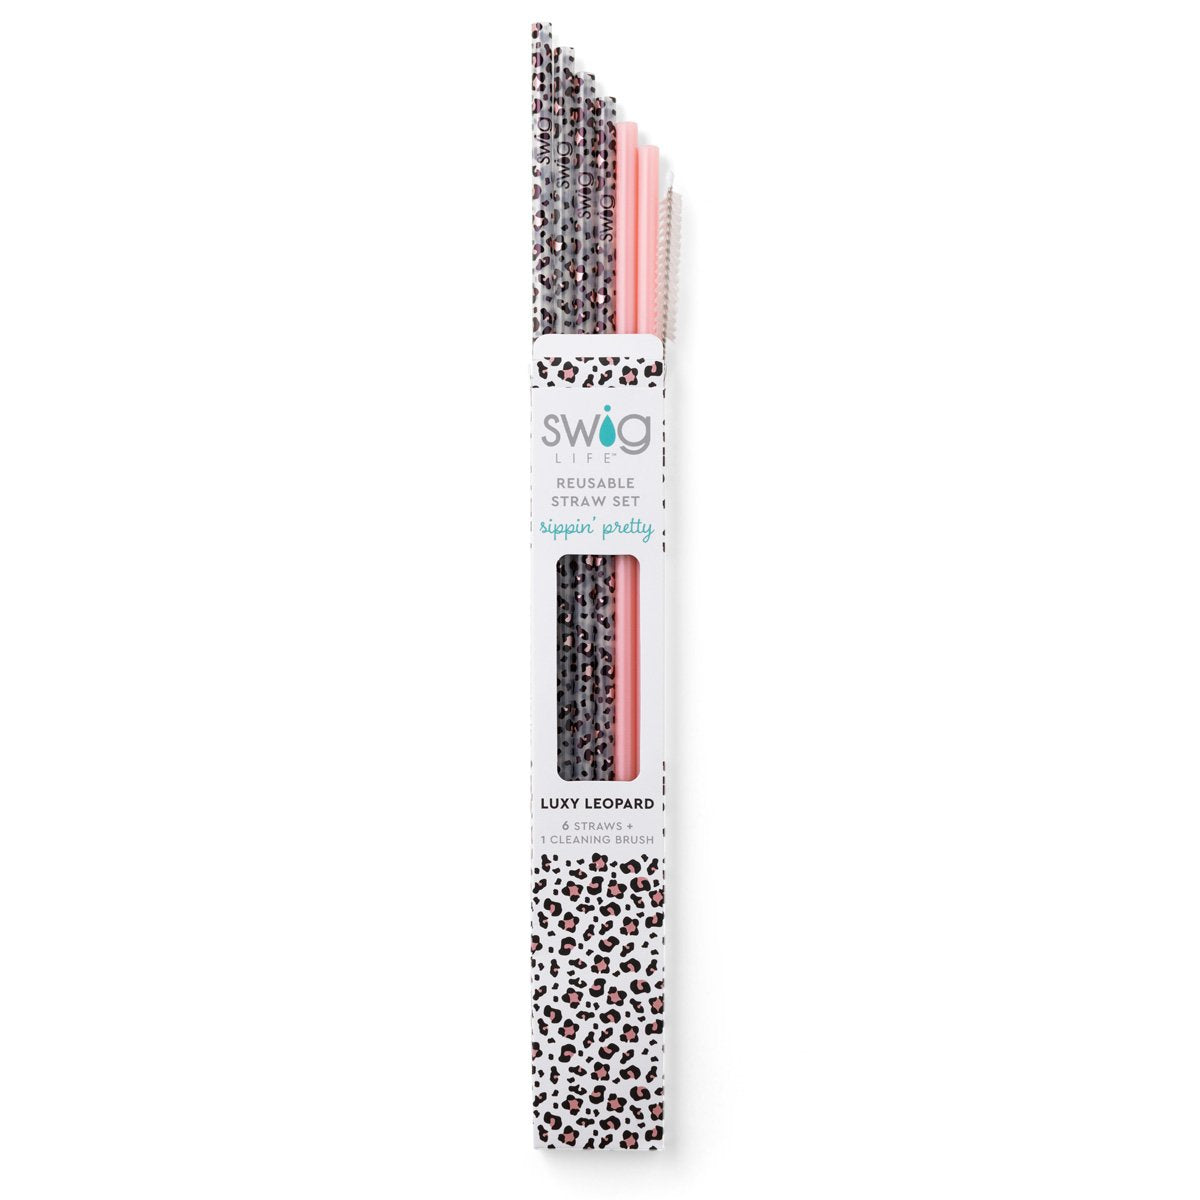 Swig Confetti & Pink Reusable Straw Set